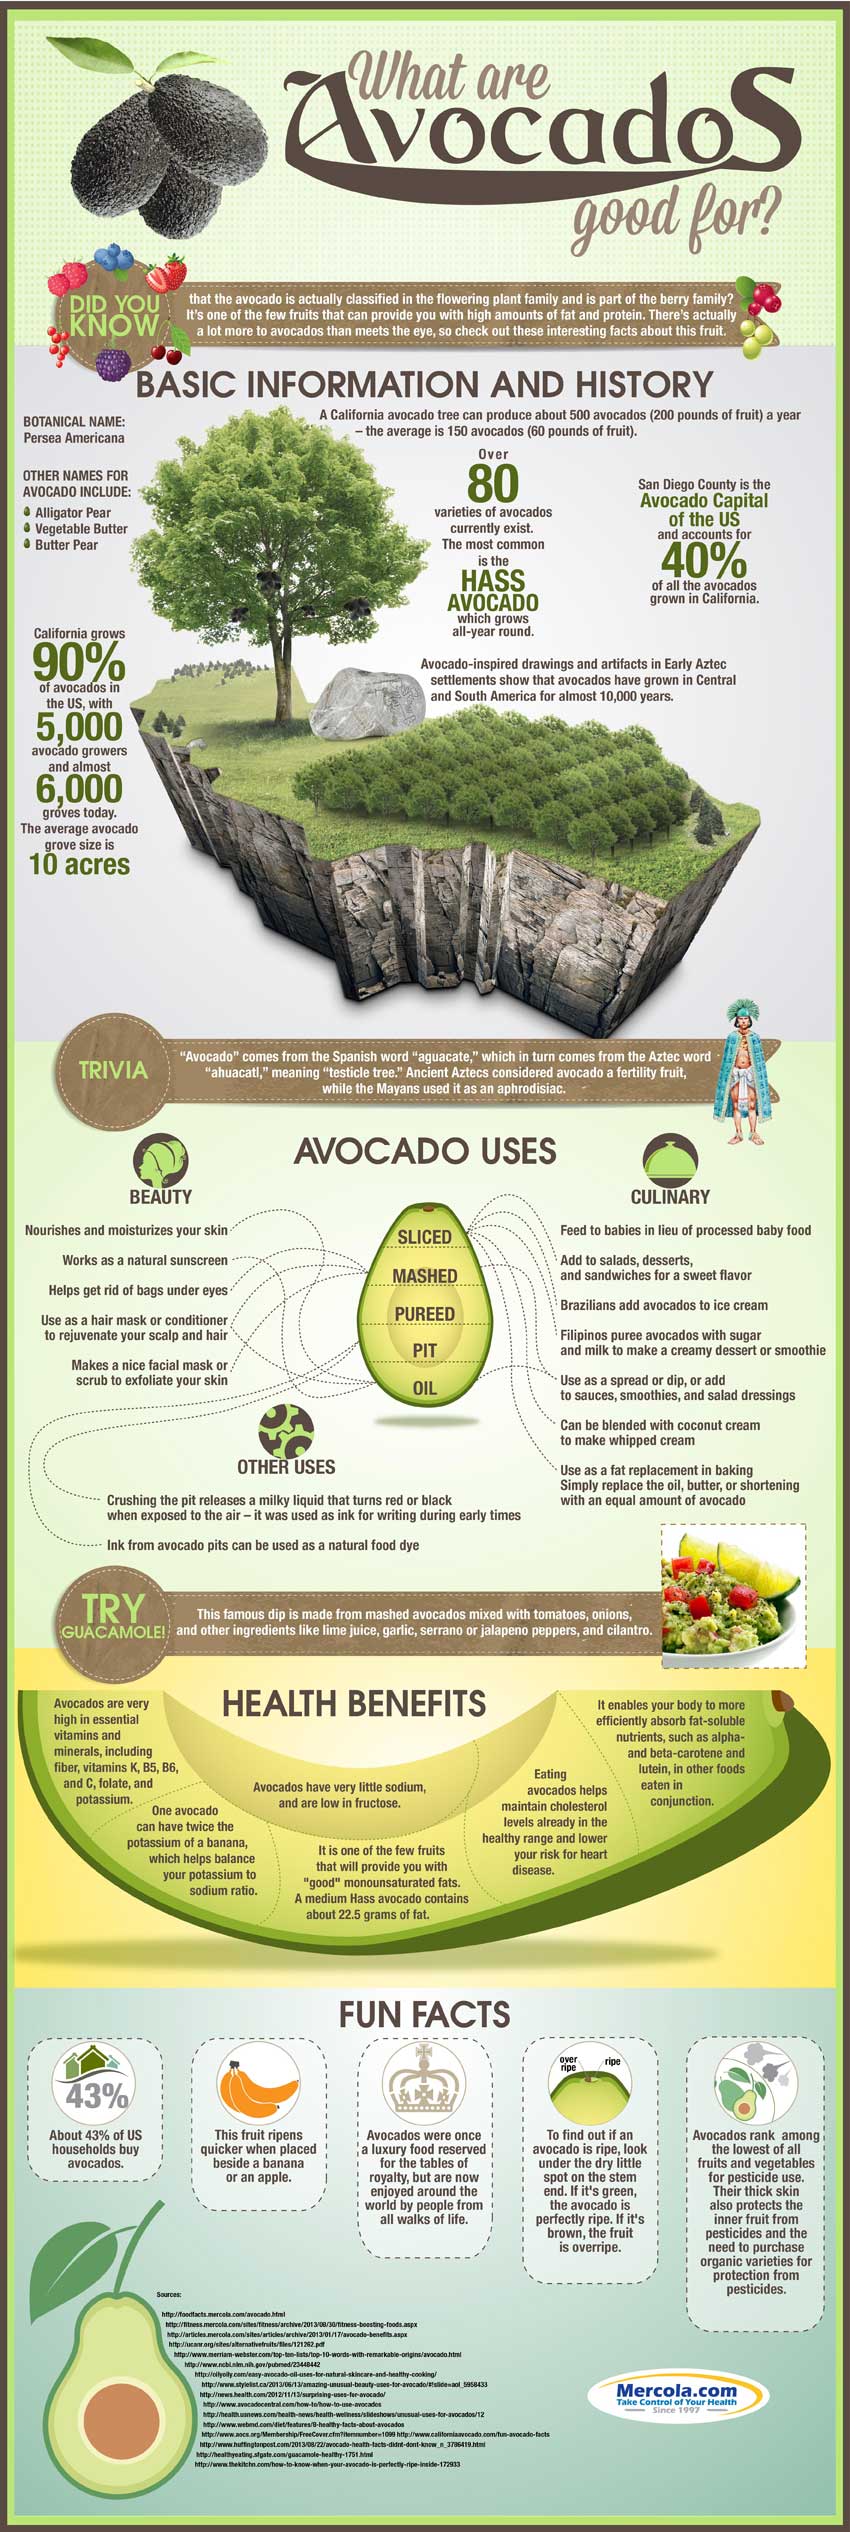 Avocado uses and Health benefits